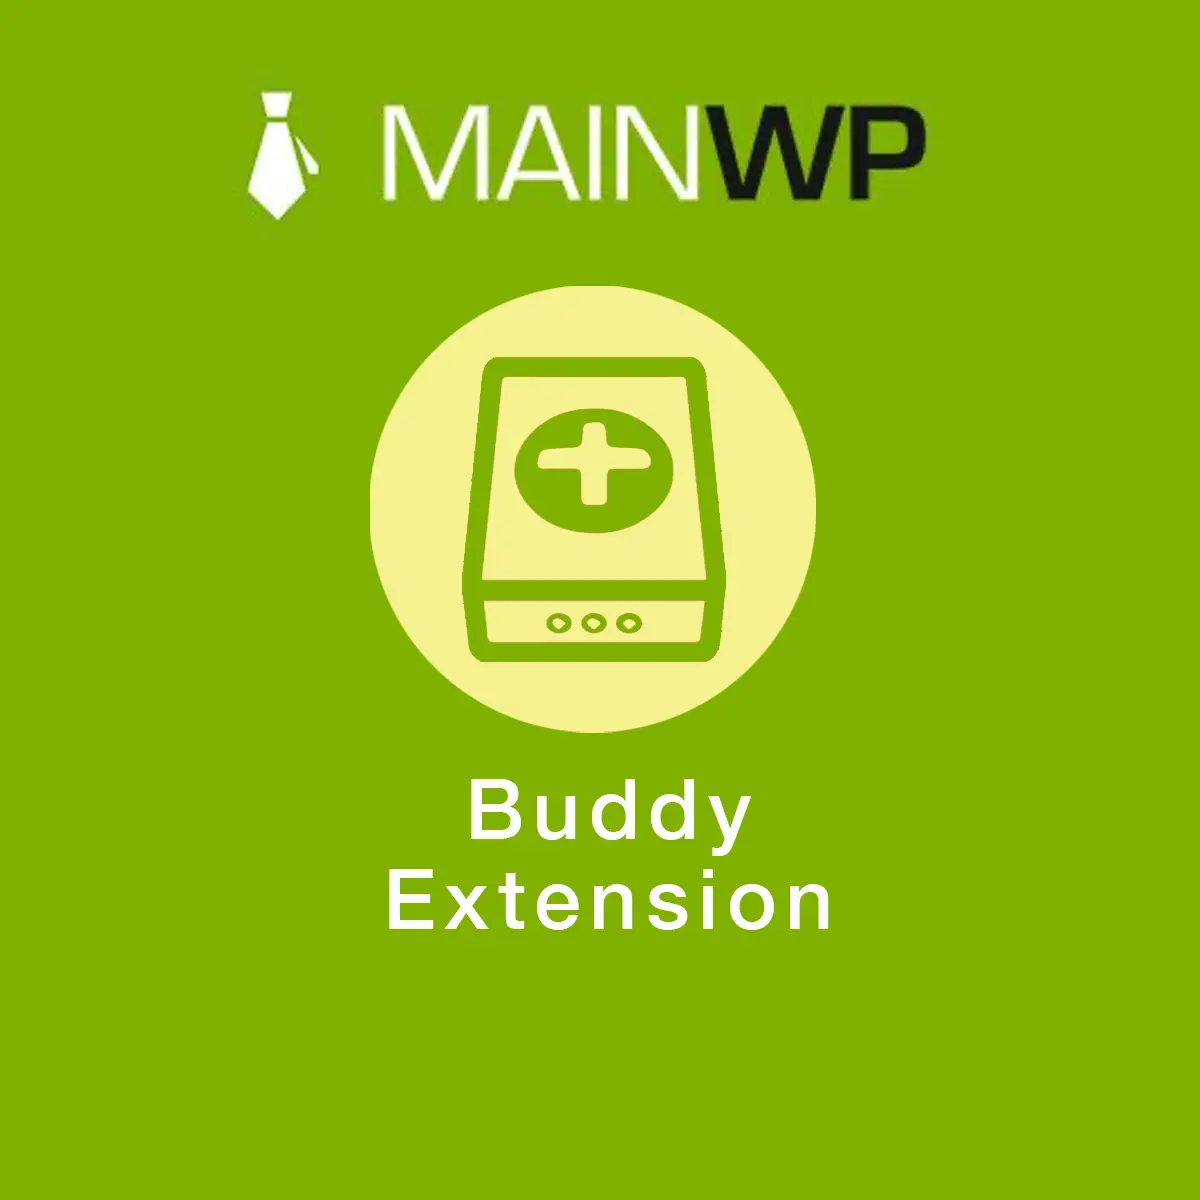 Download the MainWP Buddy plugin